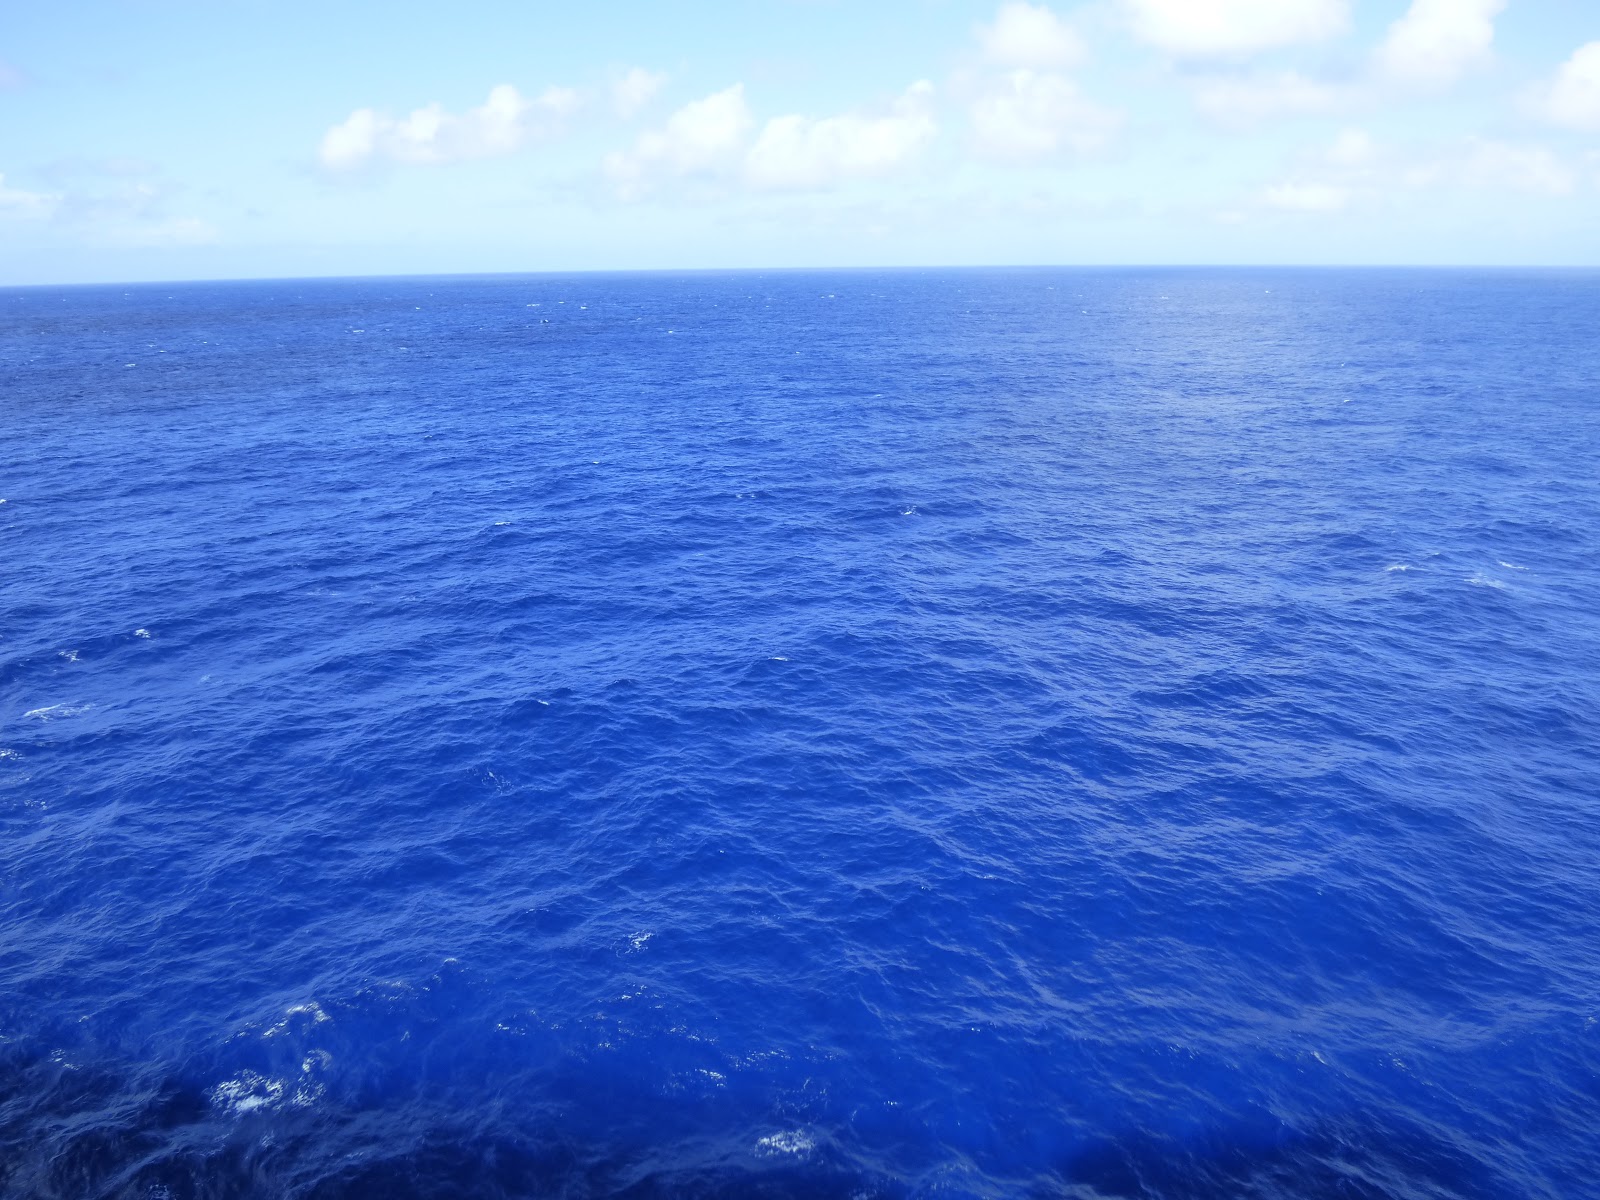 Бескрайний океан 1. Бескрайнее синее море. Бескрайний океан. Синий океан. Атлантический океан.